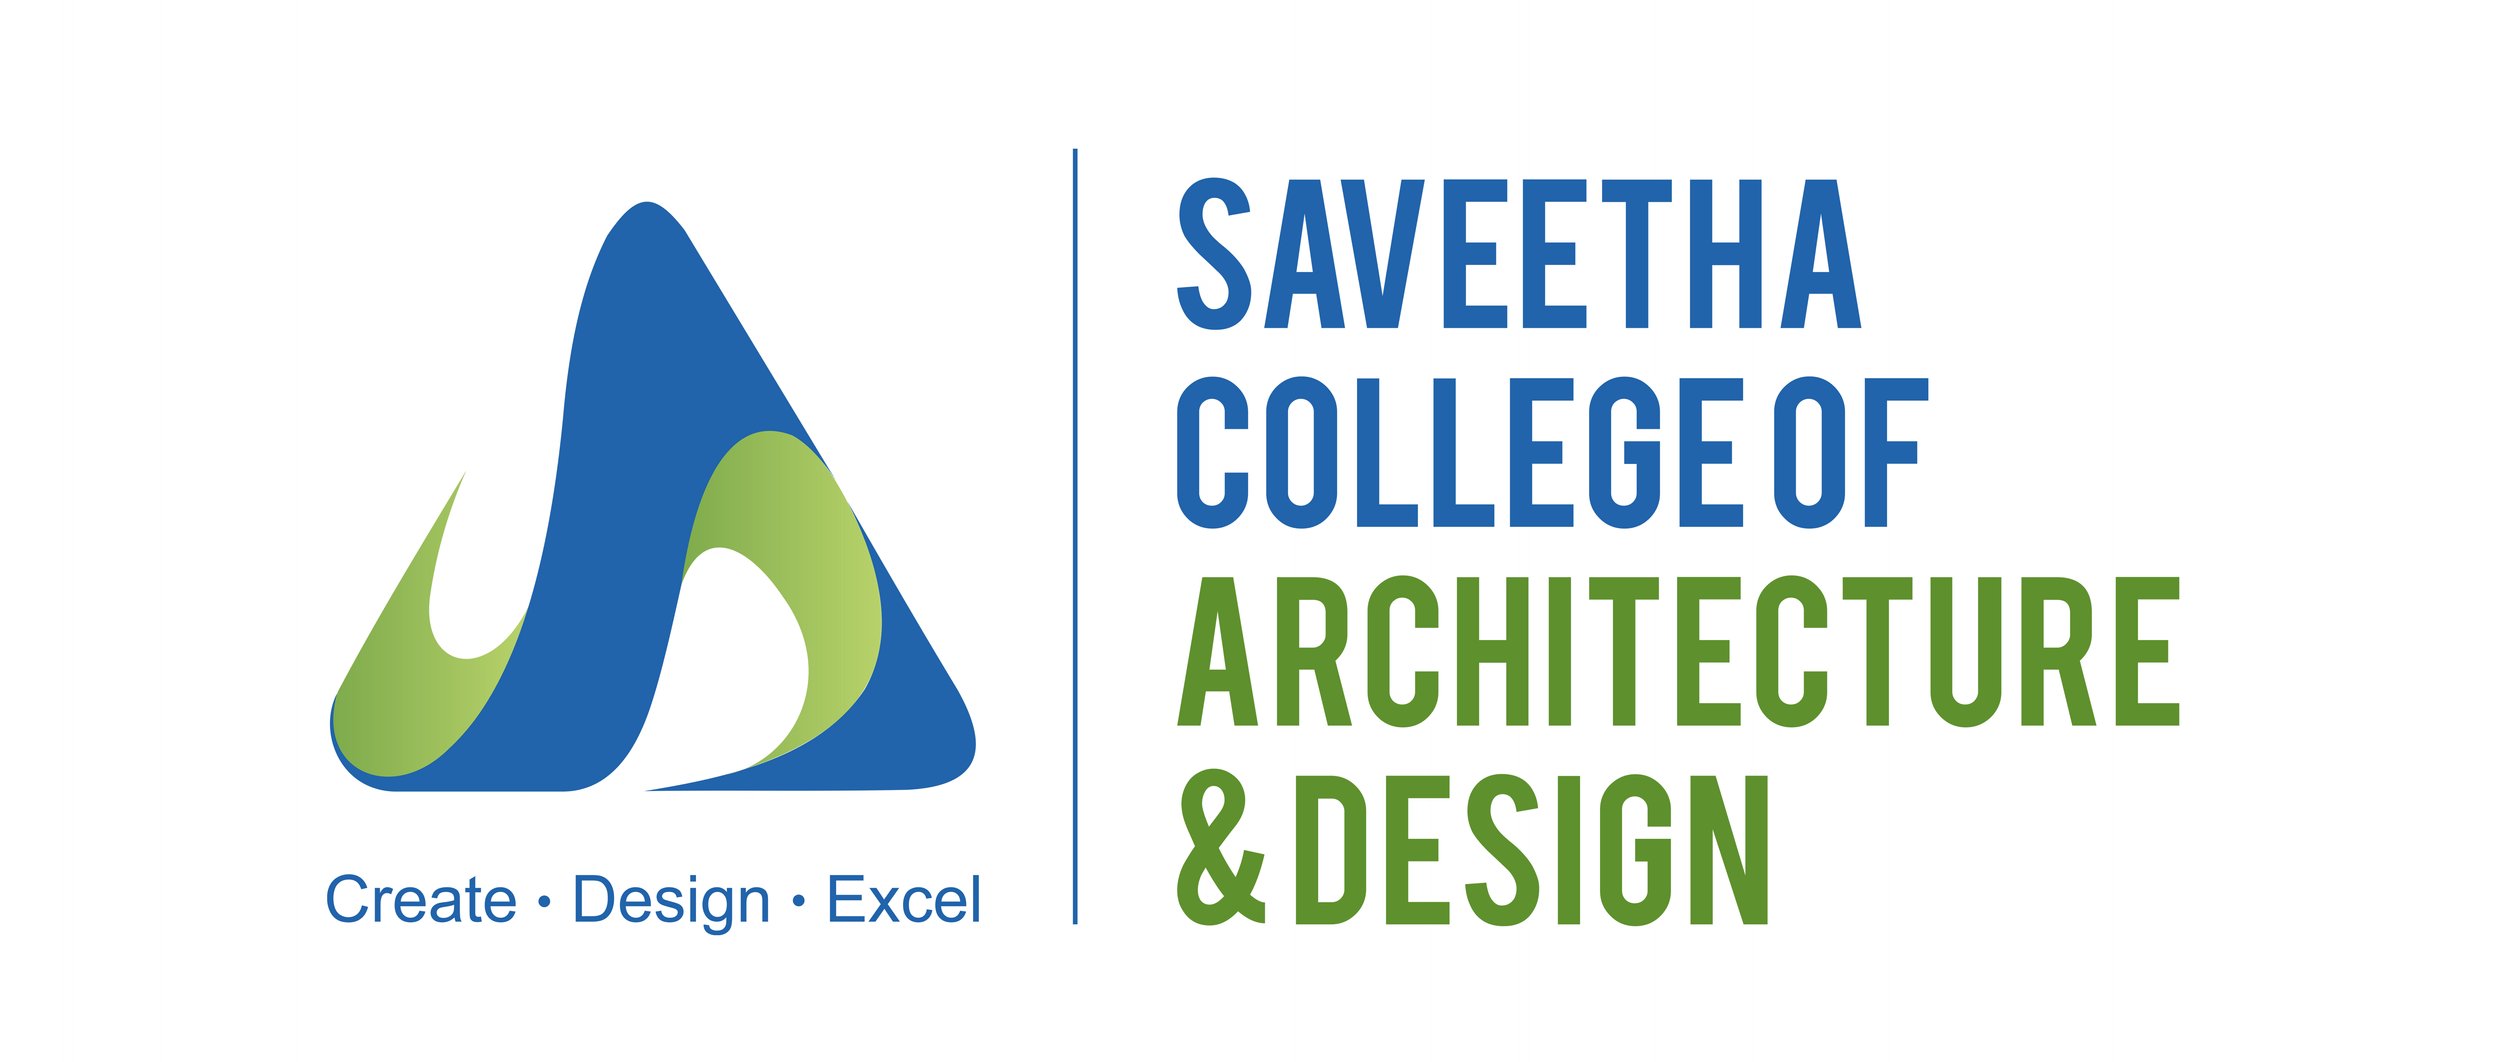 Architecture &amp; Design @ Saveetha